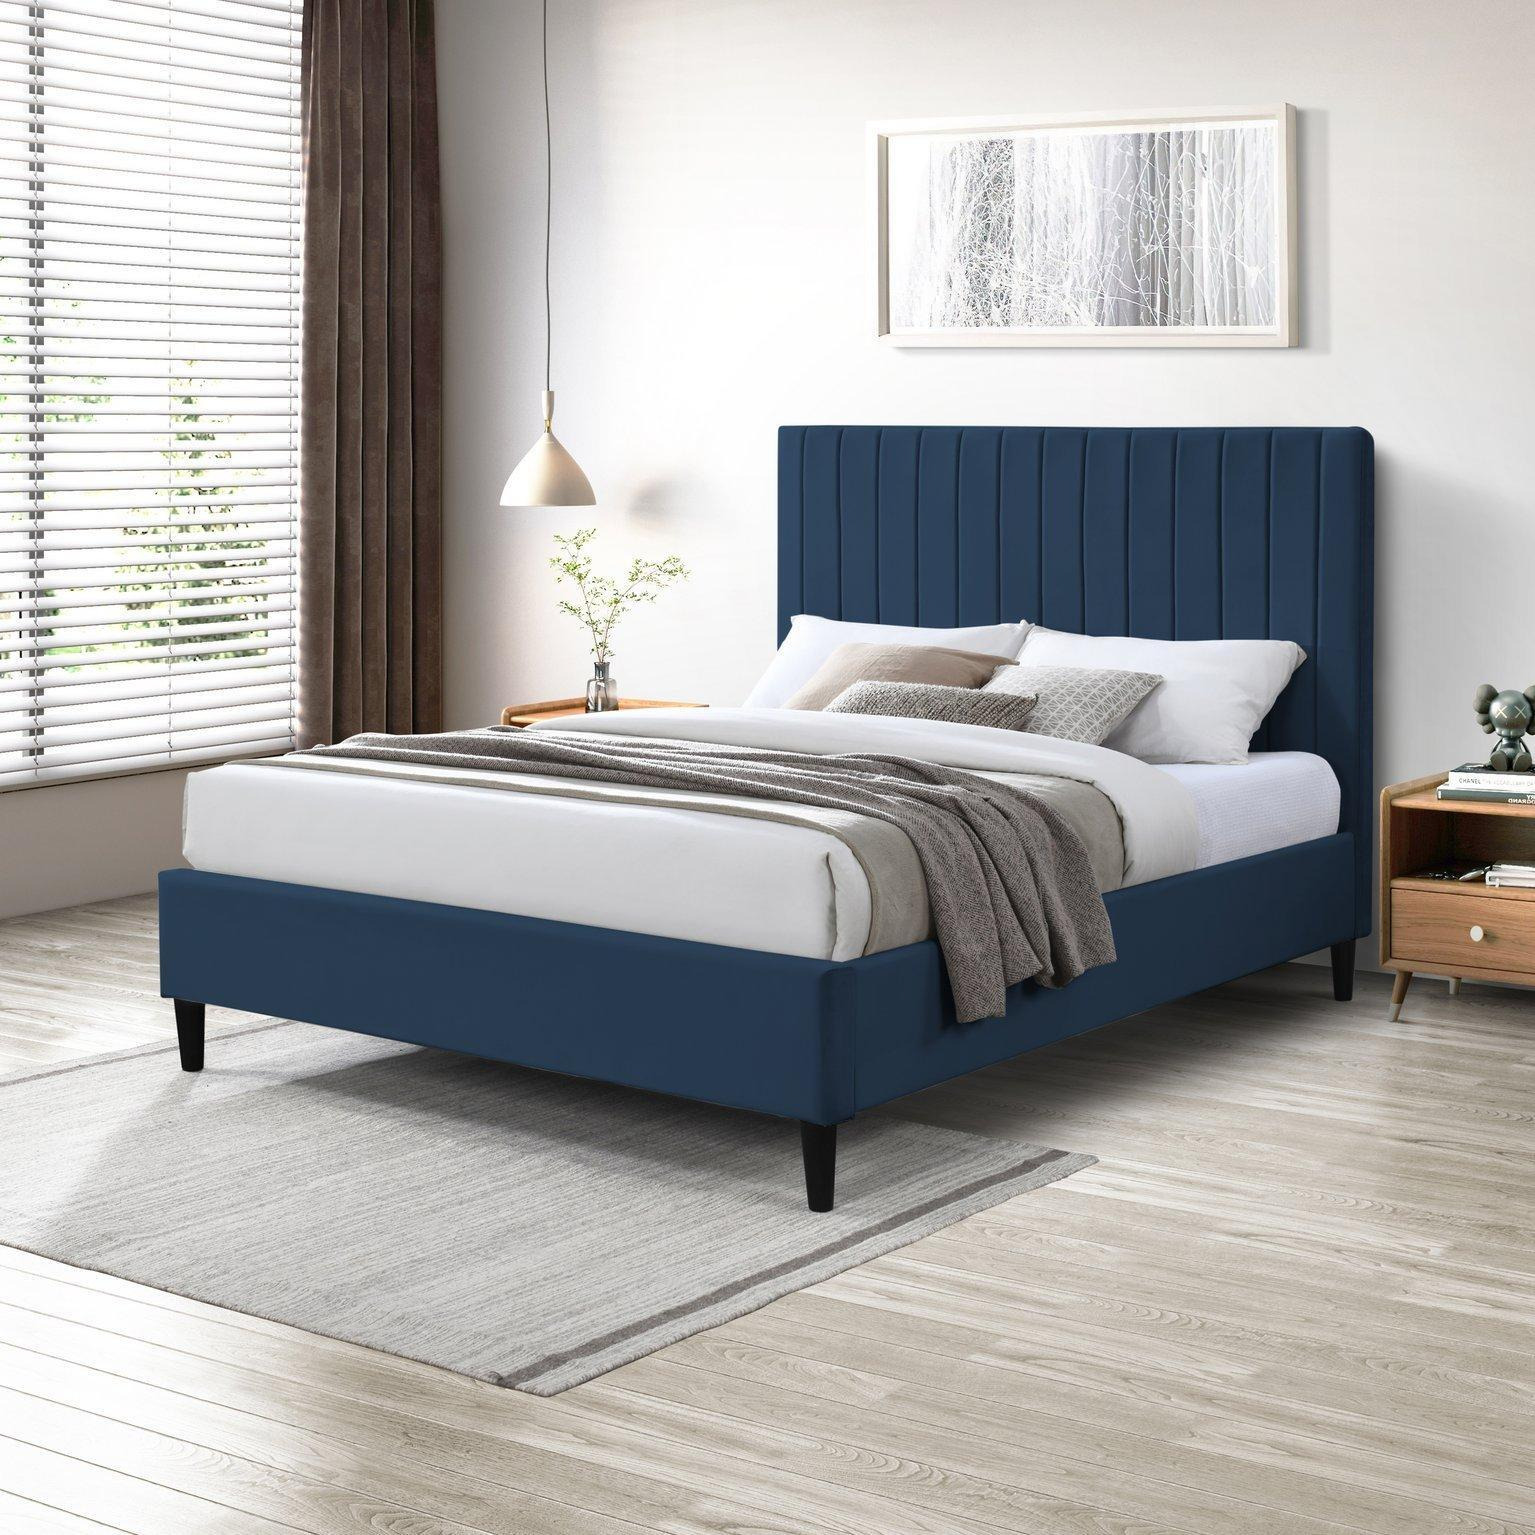 Aster Classic Solid Wood Bed Frame Upholstered in Velvet - image 1